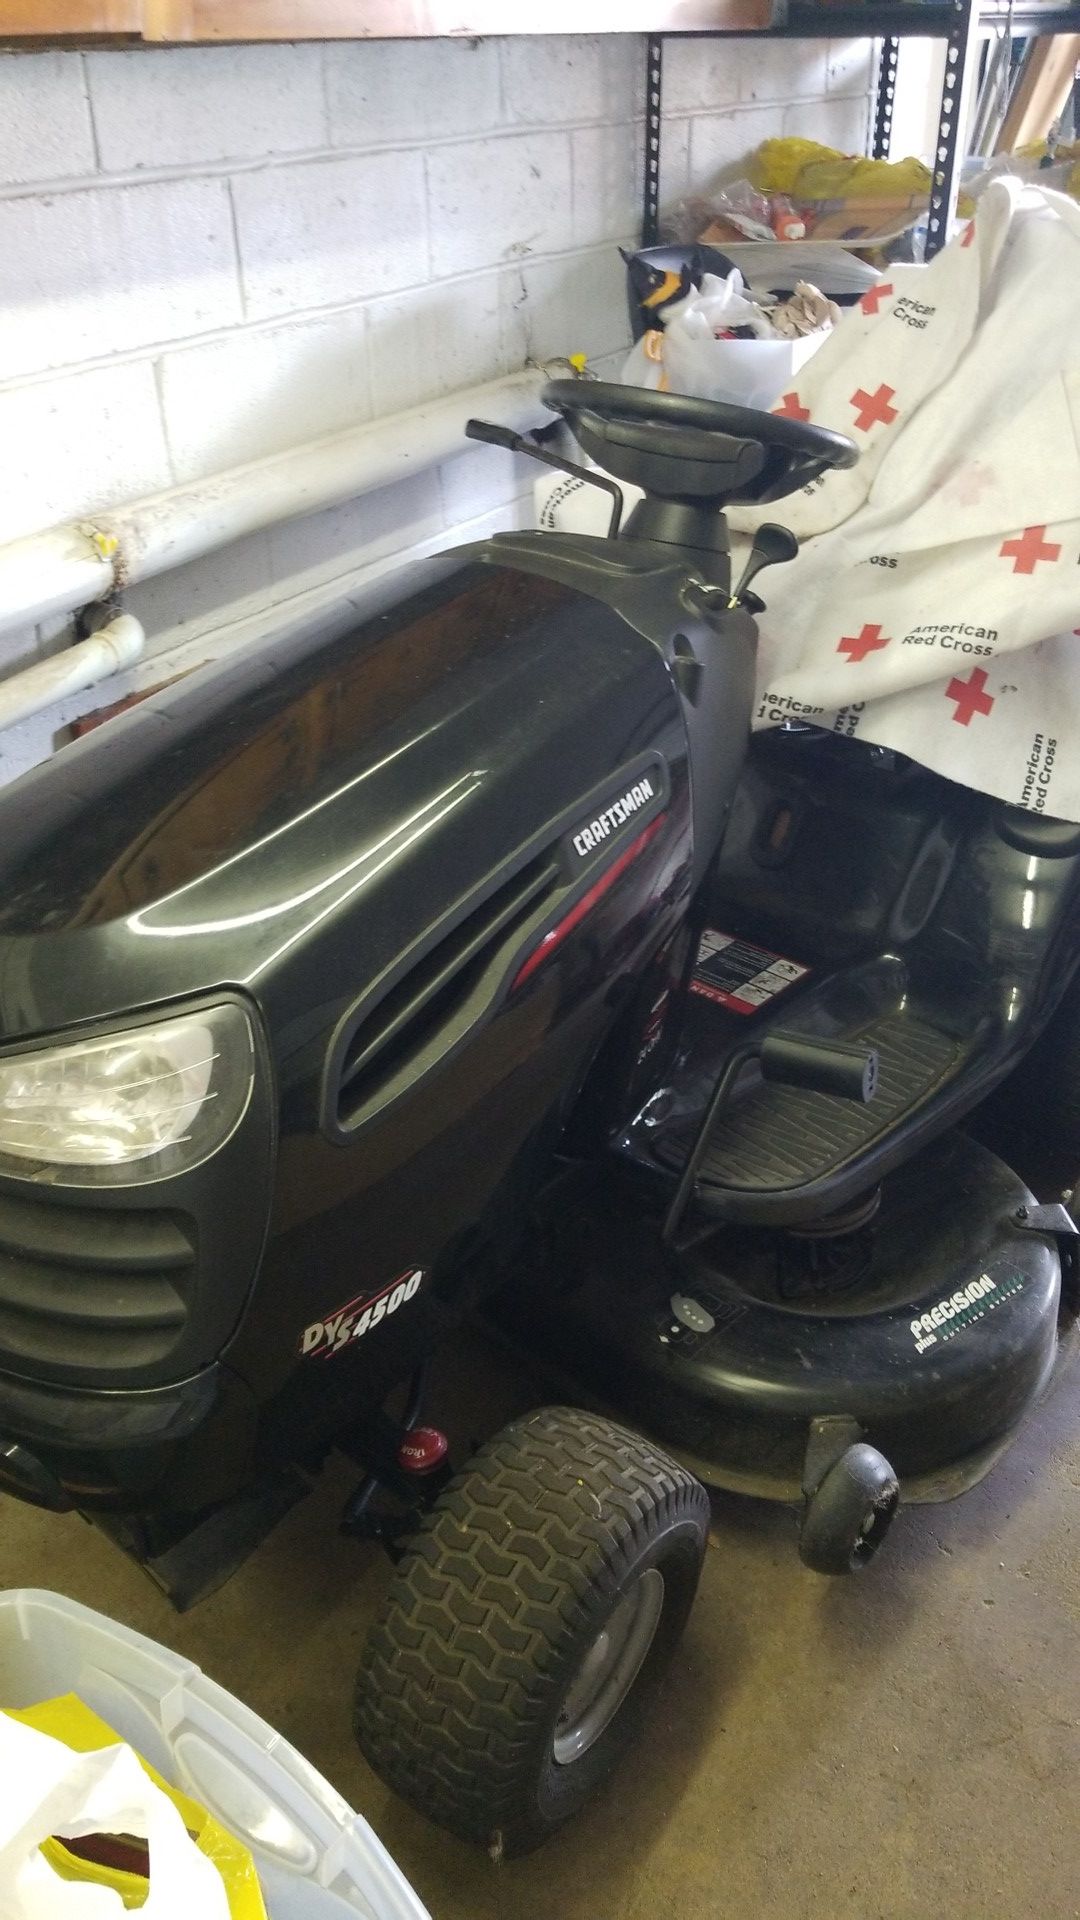 Craftsman Dys 4500 ride on lawn mower